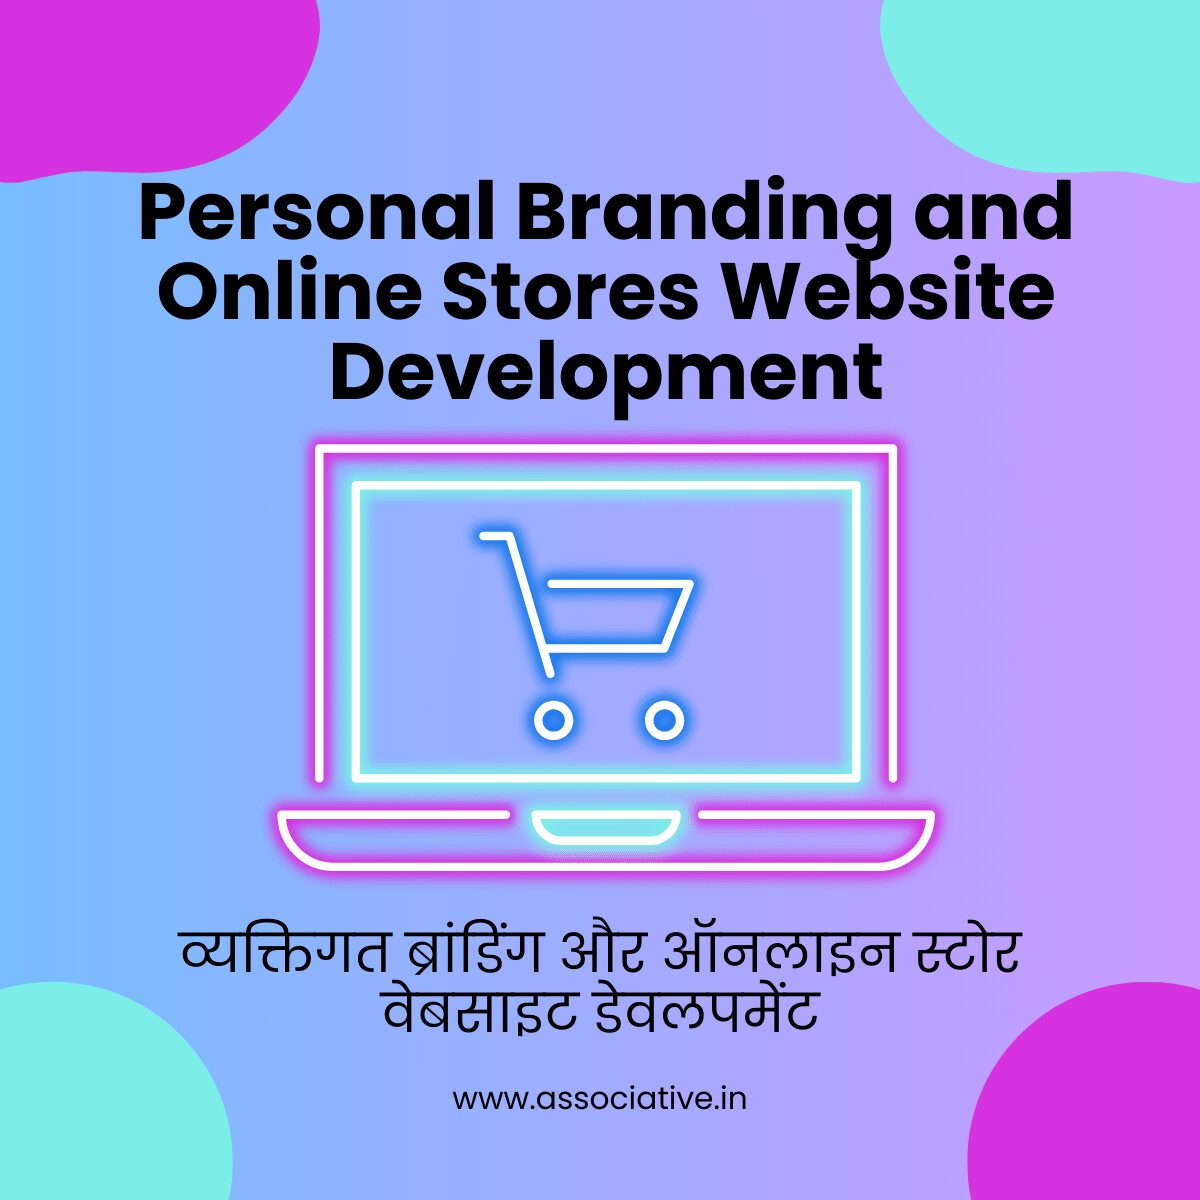 Personal Branding and Online Stores Website Development व्यक्तिगत ब्रांडिंग और ऑनलाइन स्टोर वेबसाइट डेवलपमेंट